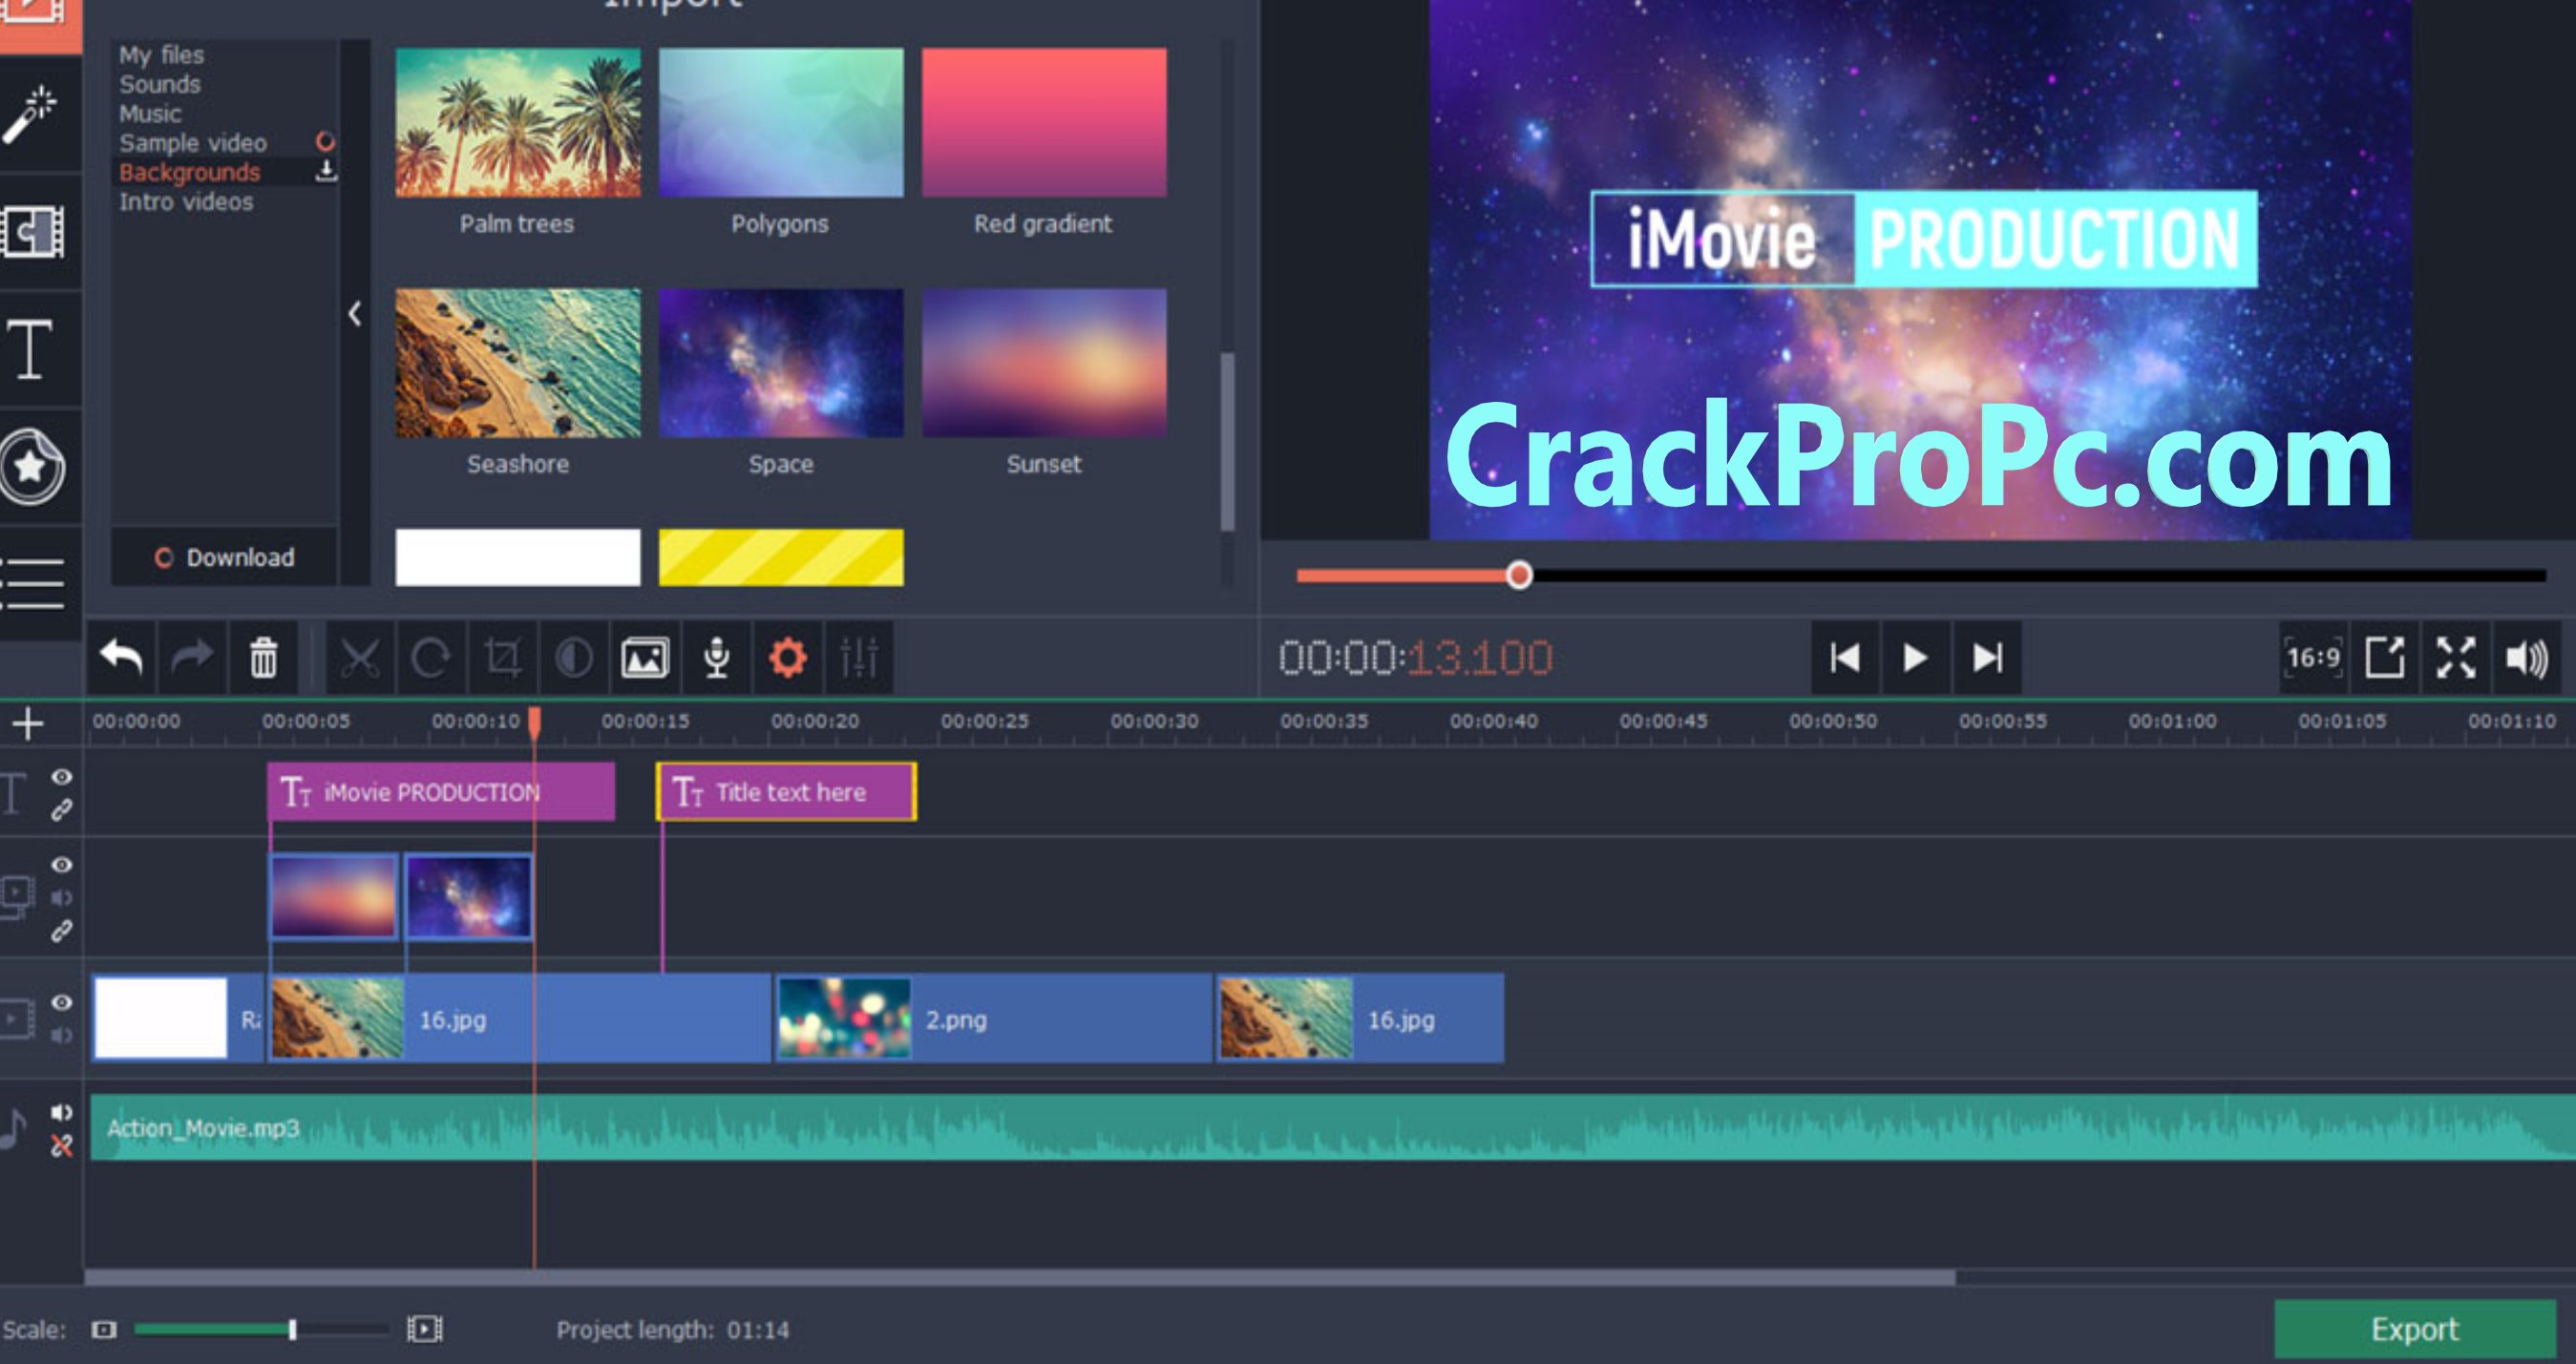 iMovie 10.3.1 Crack Win + Mac Full Latest Version Free Download 2022